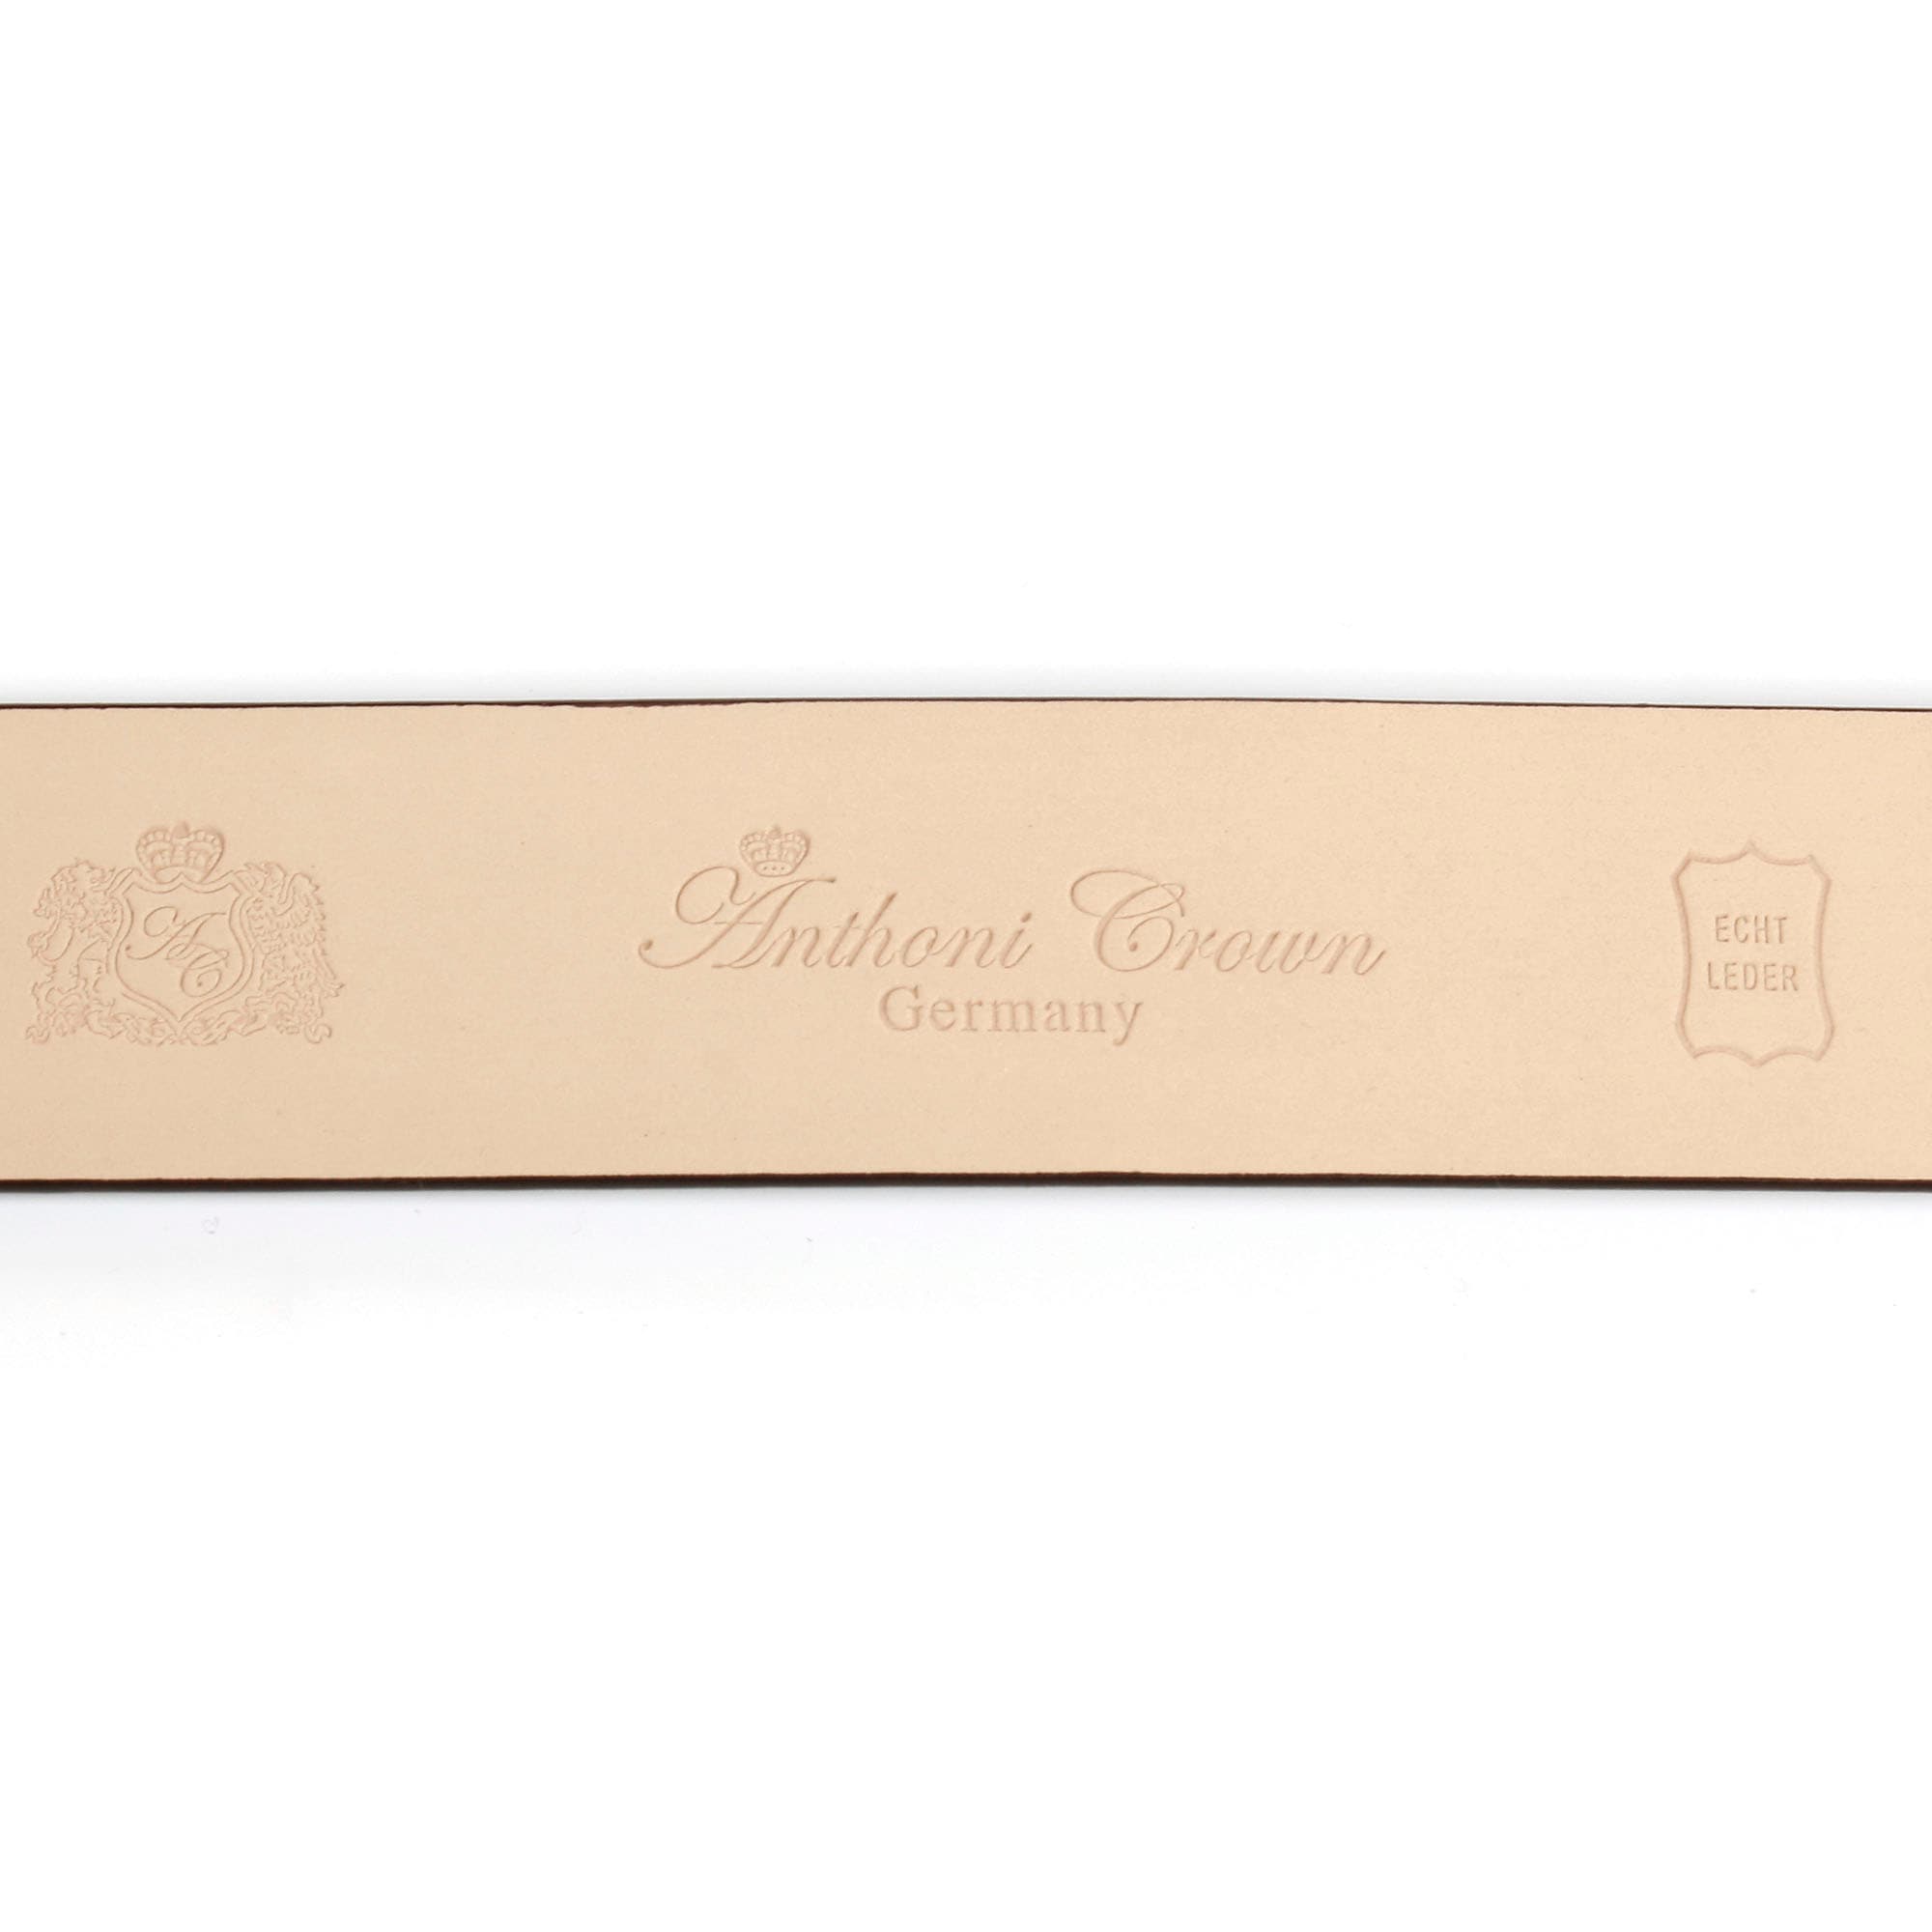 Schließe Crown Anthoni teilbezogene Anker-Logo Ledergürtel mit